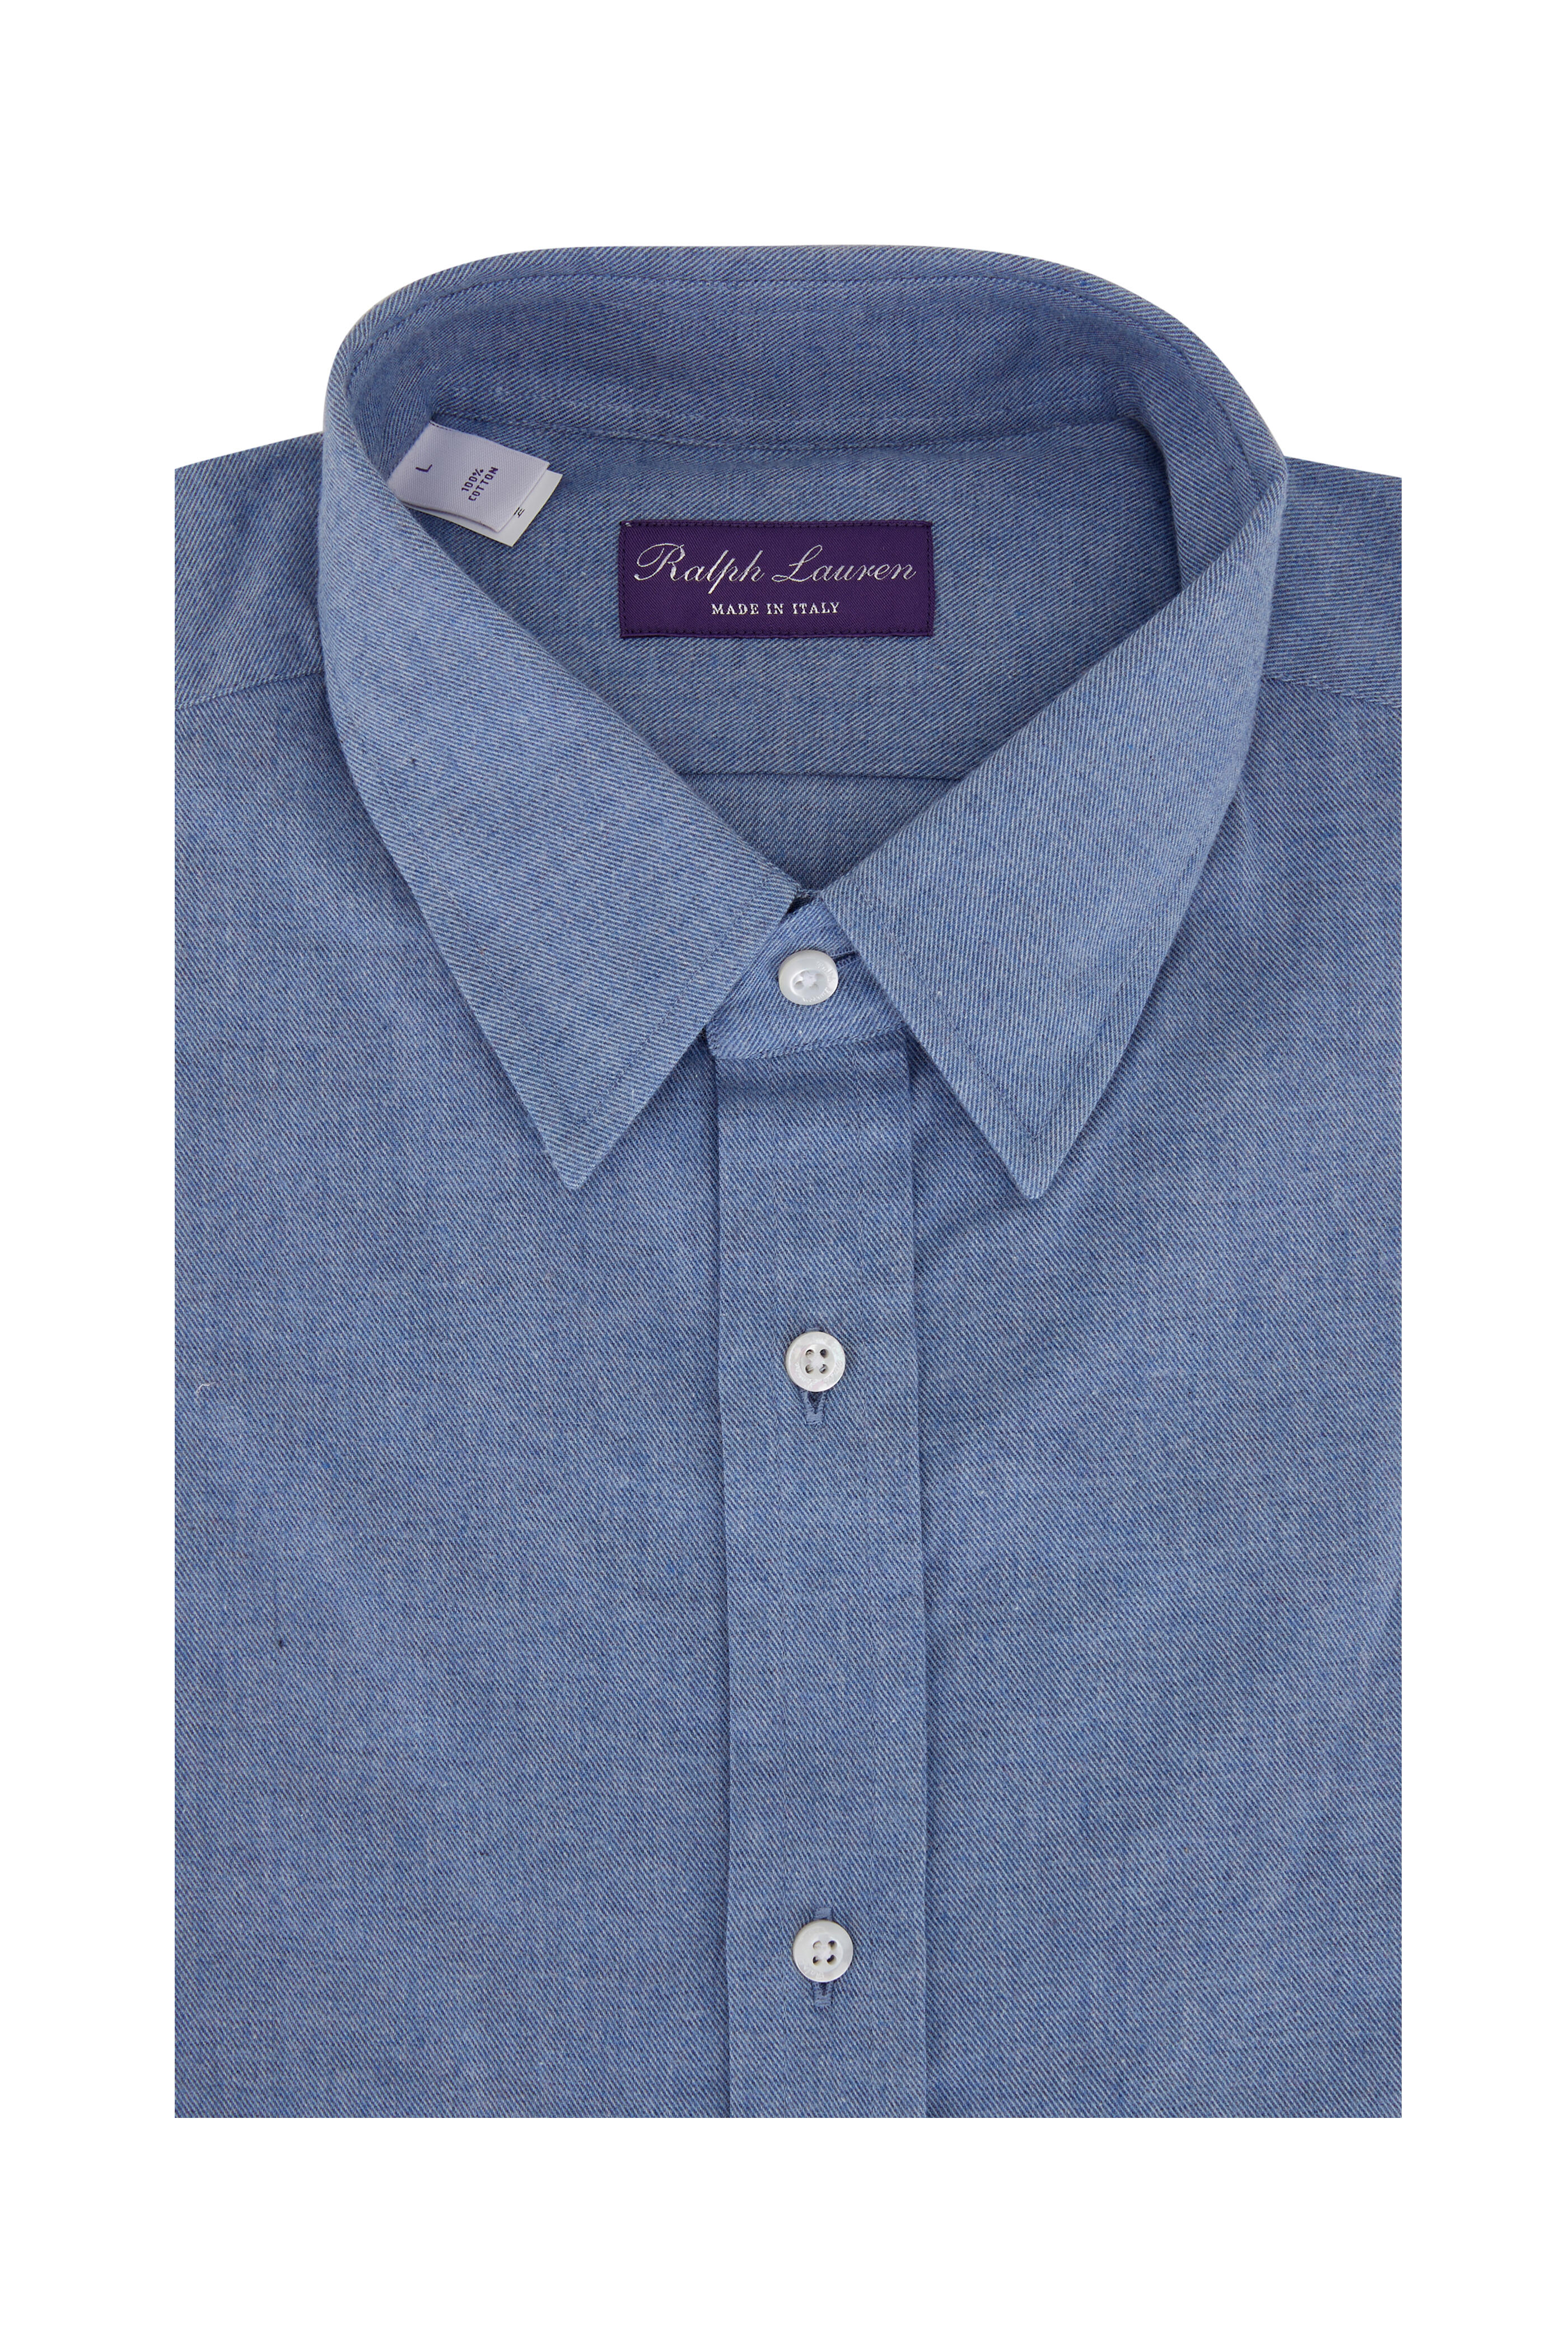 Ralph Lauren Purple Label - Blue Melange Twill Sport Shirt